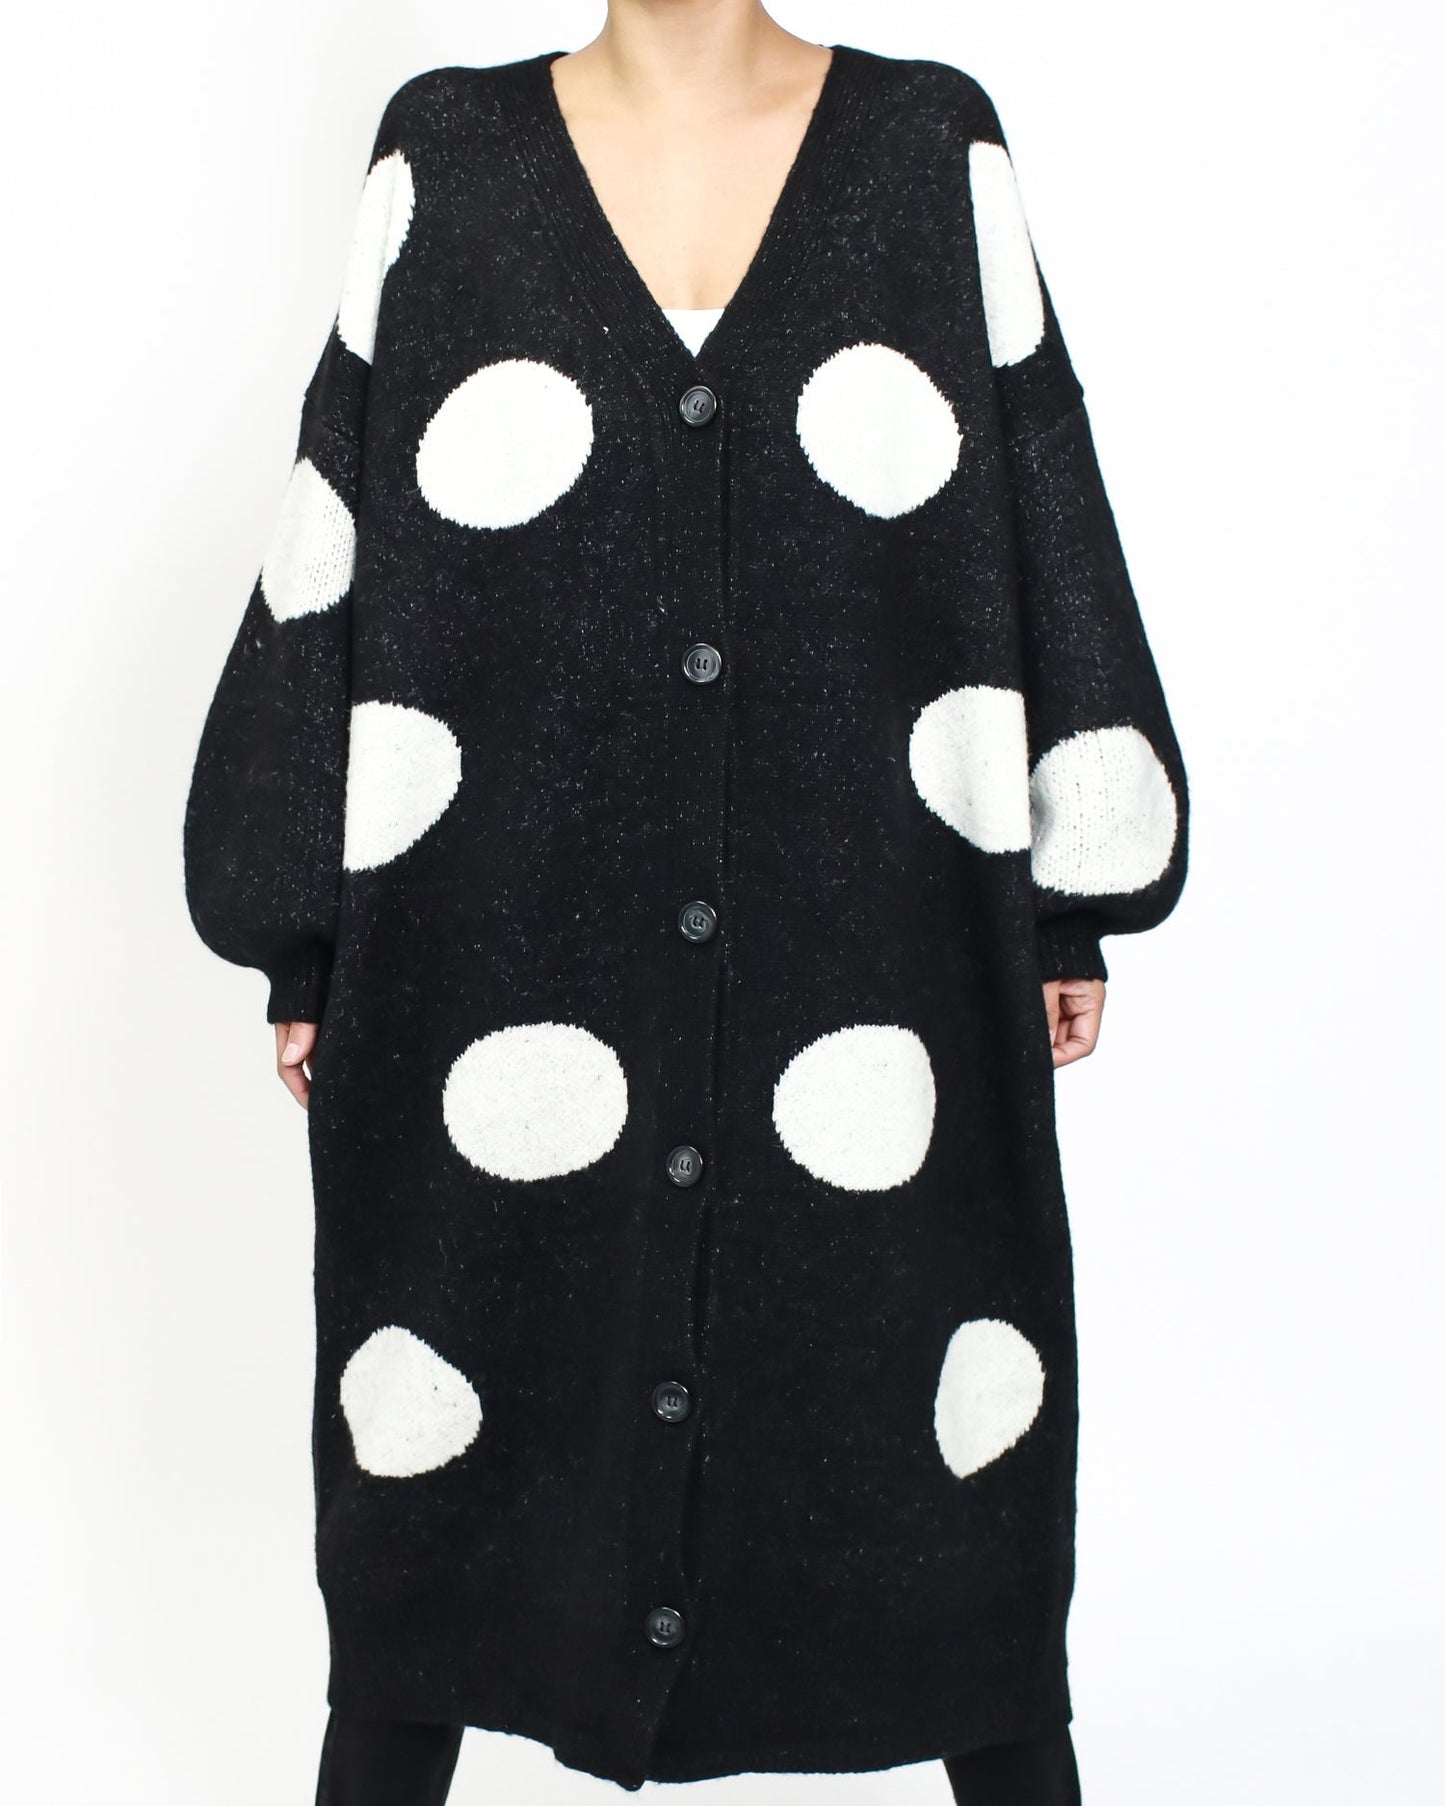 Black & ivory polka dots longline knitted cardigan *pre-order*